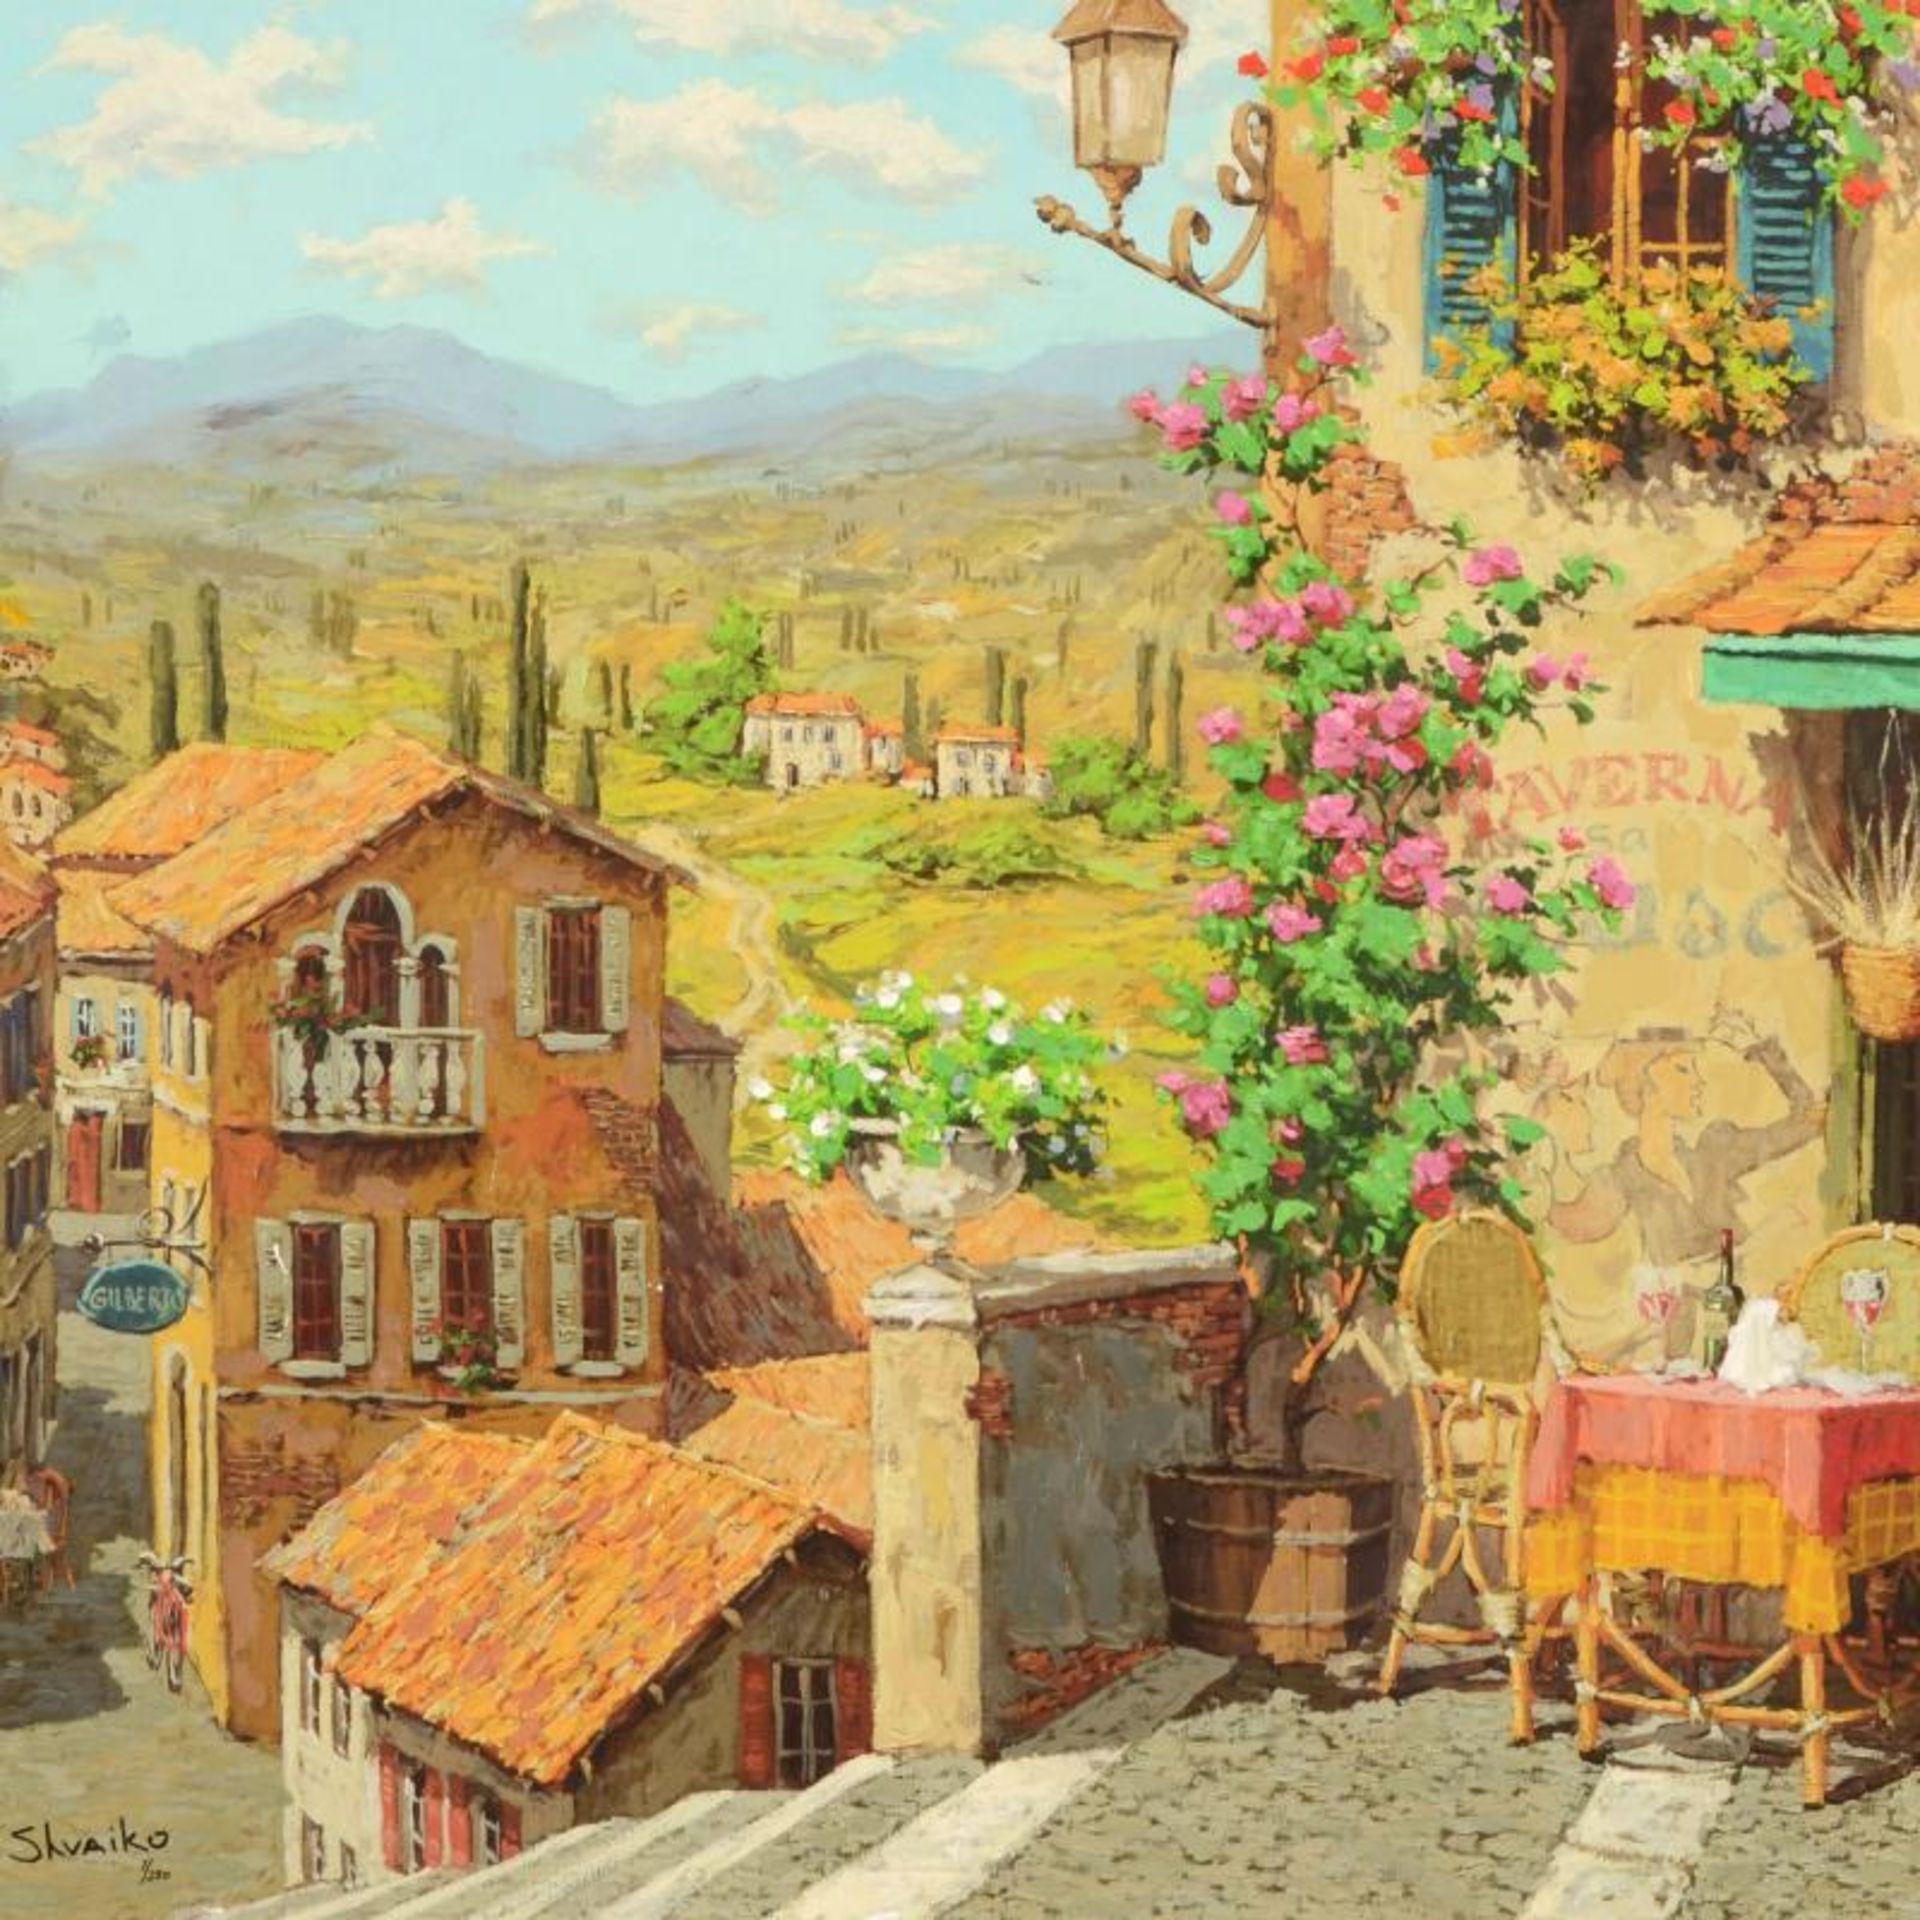 Viktor Shvaiko, "San Trovaro Taverna" Hand Embellished Limited Edition on Canvas - Image 4 of 5